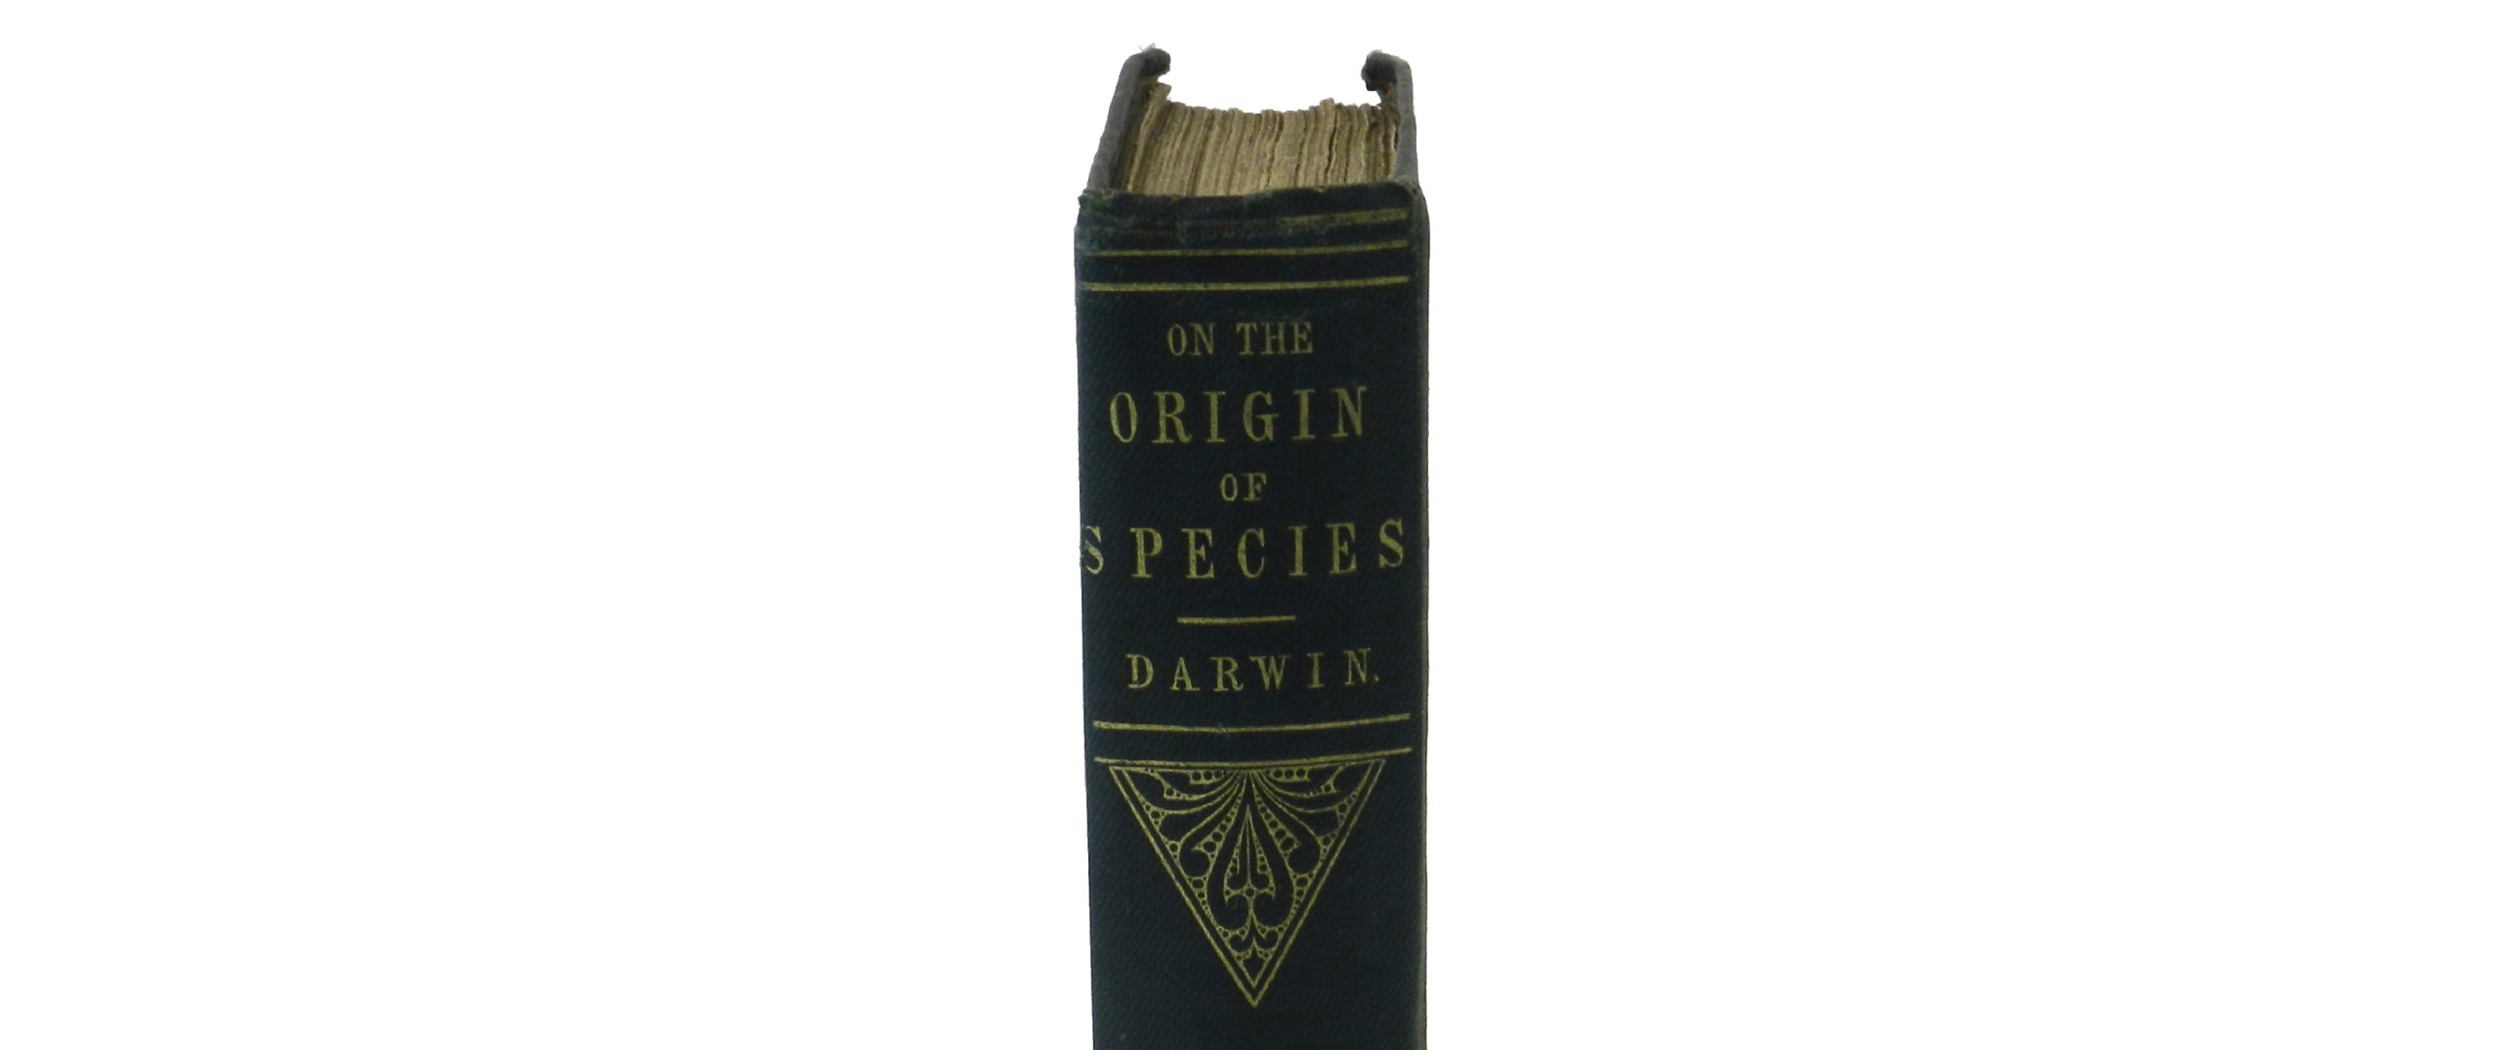 Second Edition of Shrewsbury-Born Charles Darwin’s Landmark Work